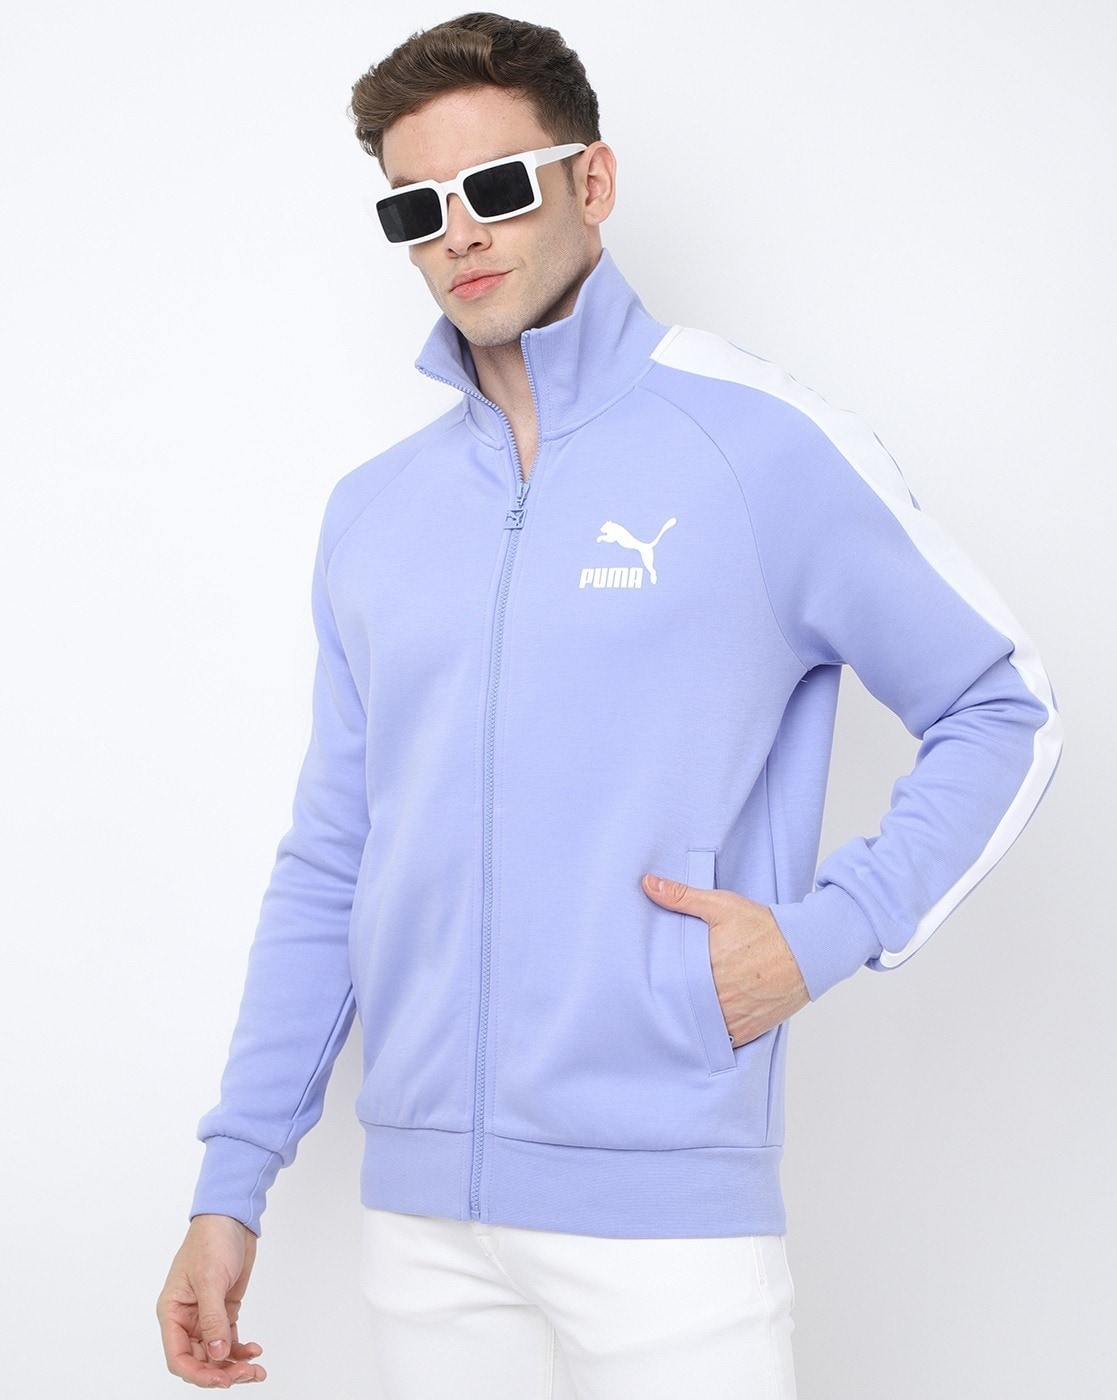 Online by Puma for Pop Coats Jackets & Buy Lavender Men